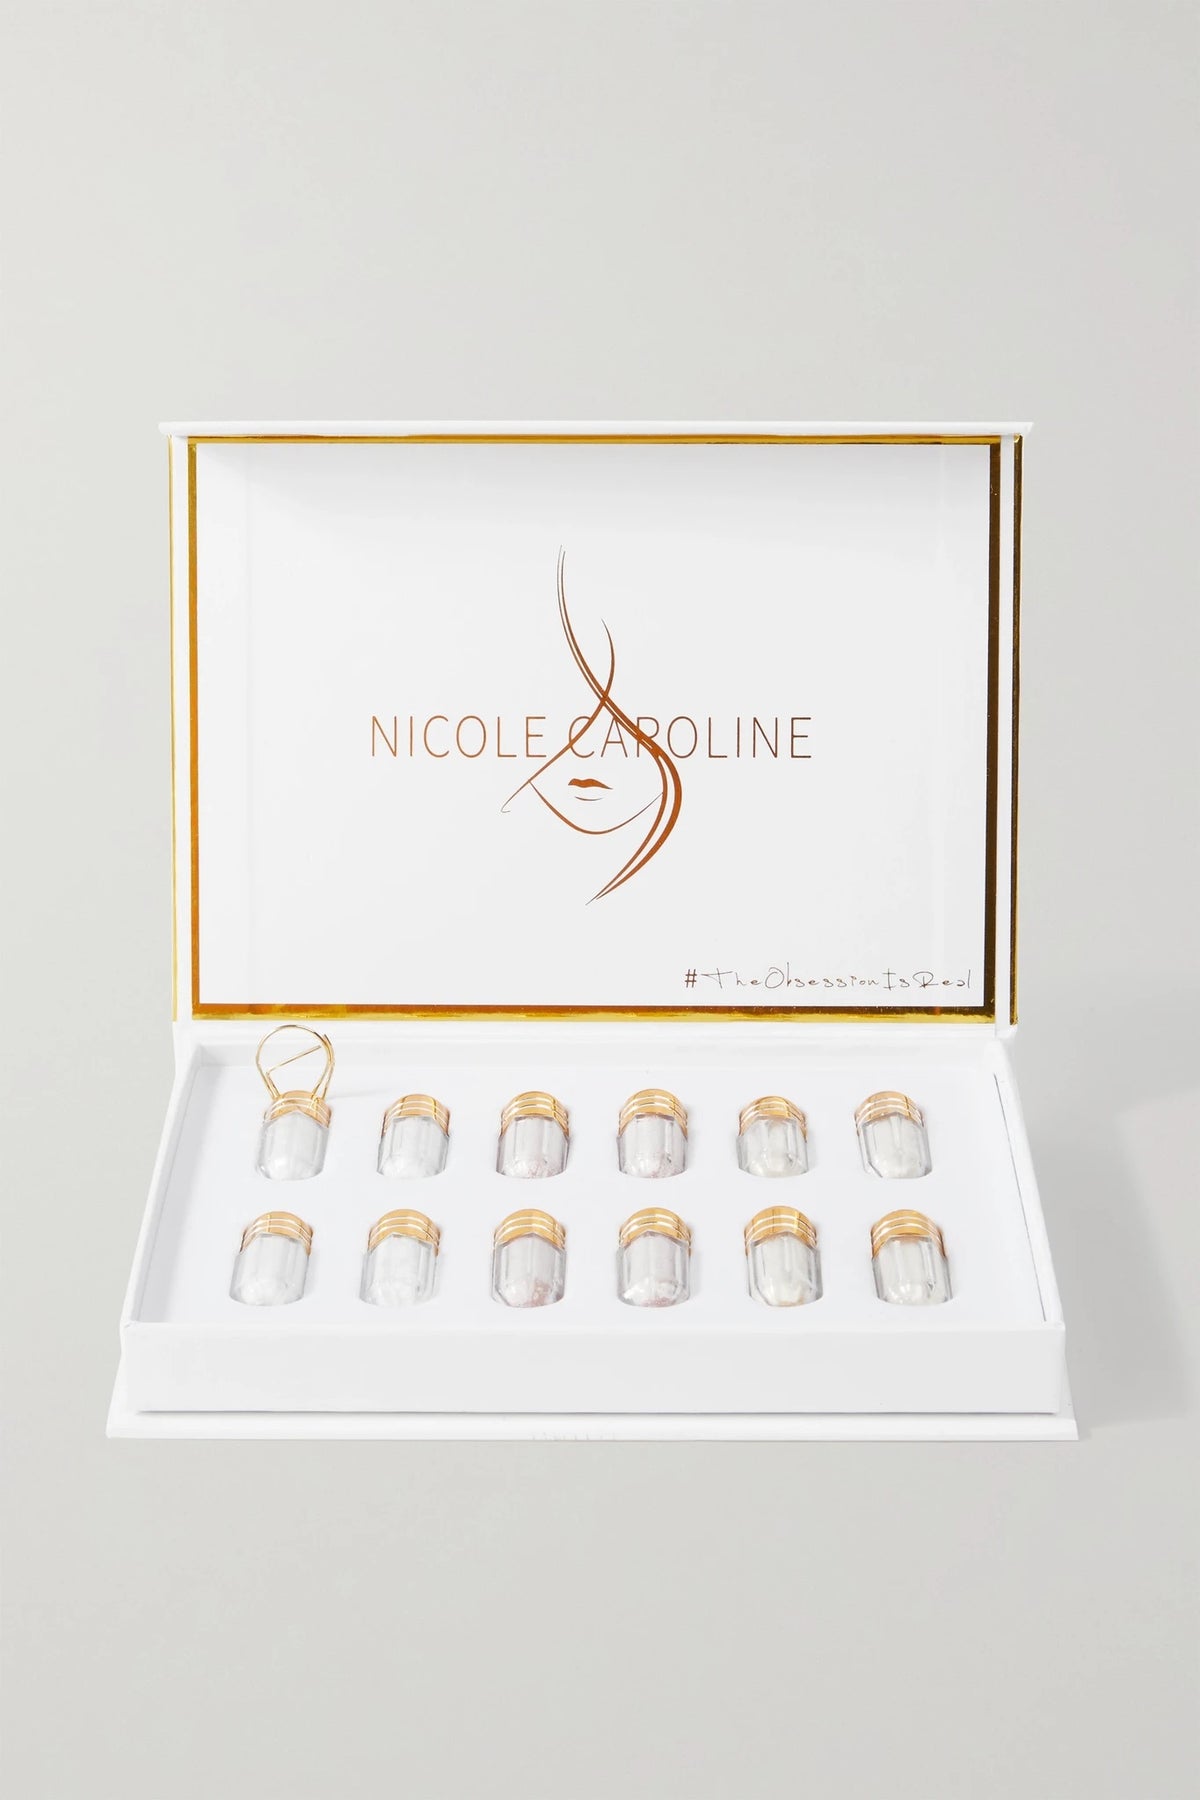 Nicole Caroline Facial Ice Kit Re-Fill Blends set of (12)